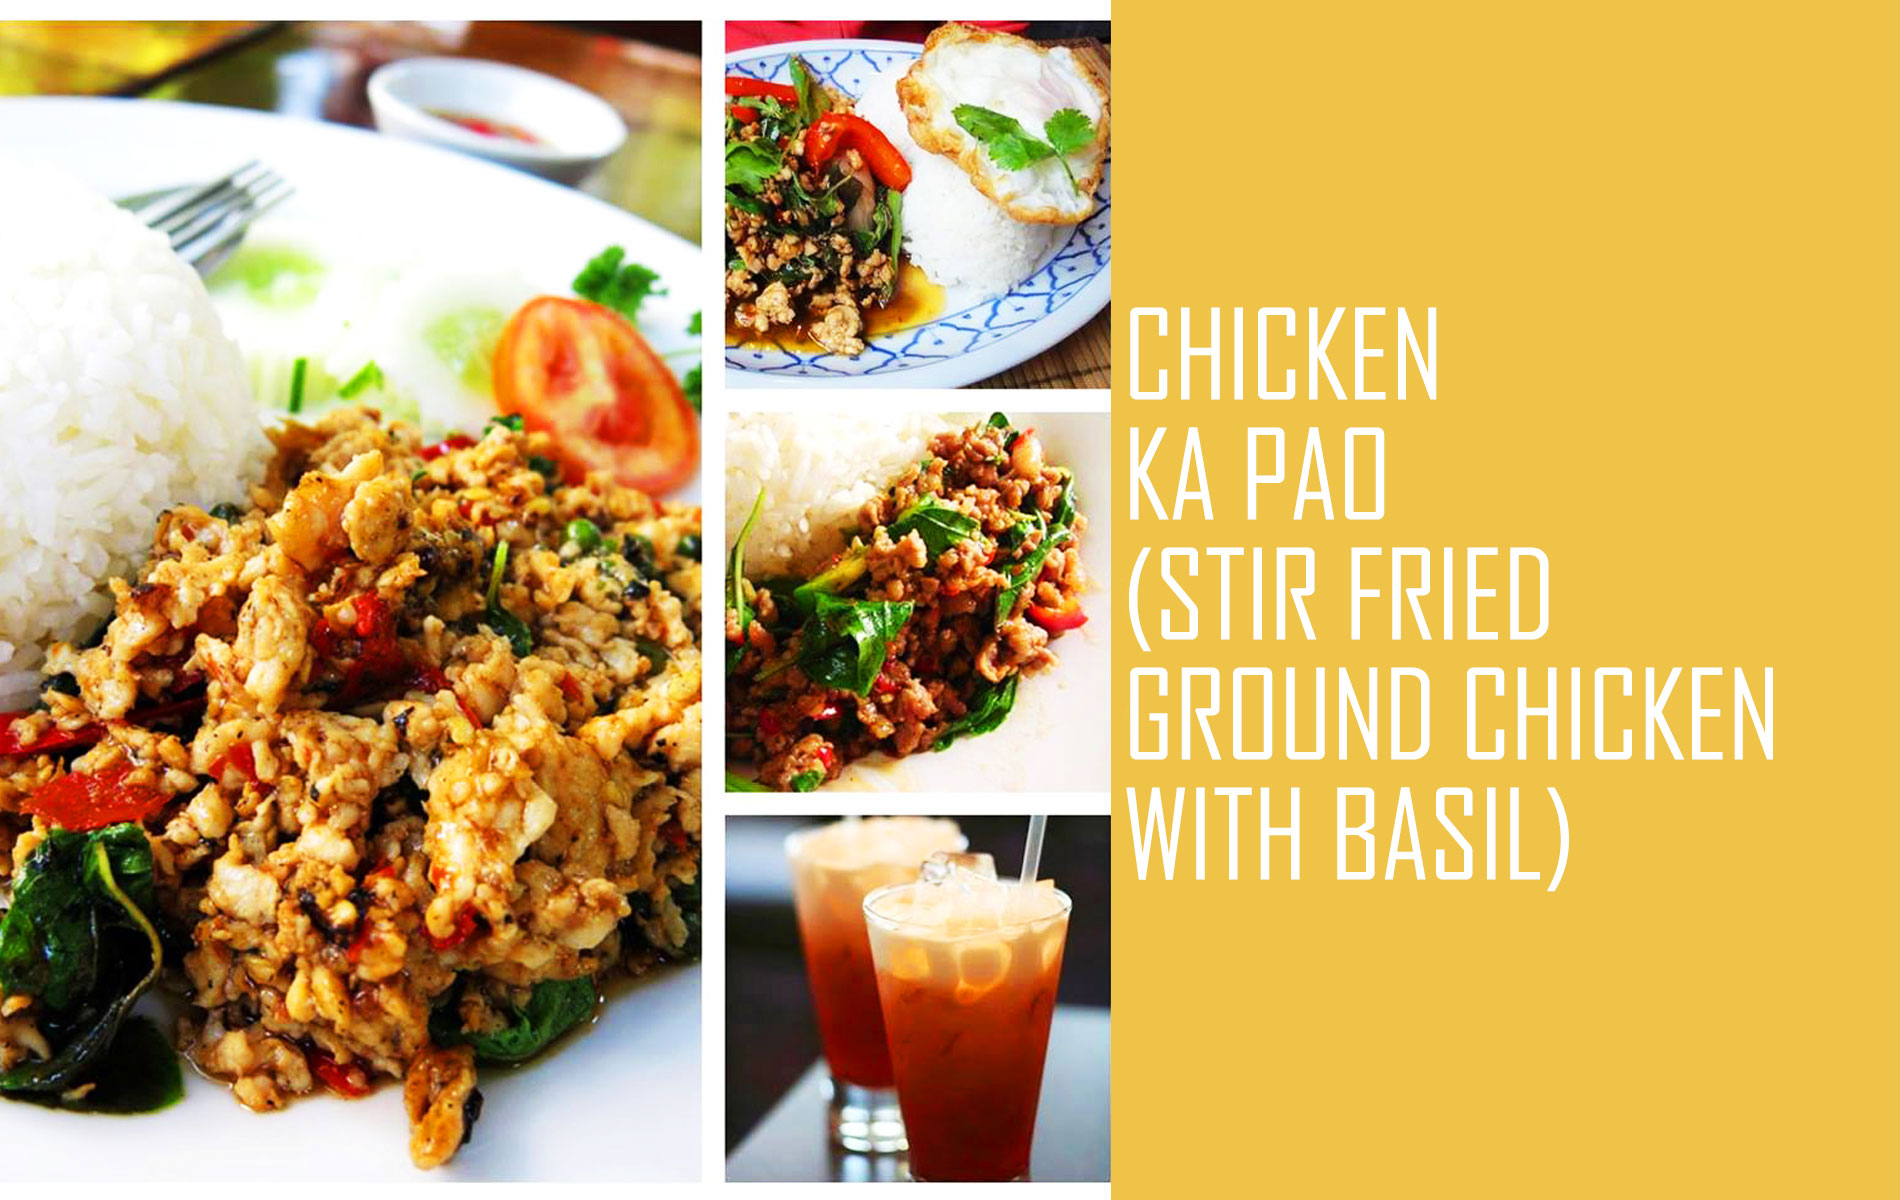 Chicken Ka Pao (Stir Fried Ground Chicken With Basil)